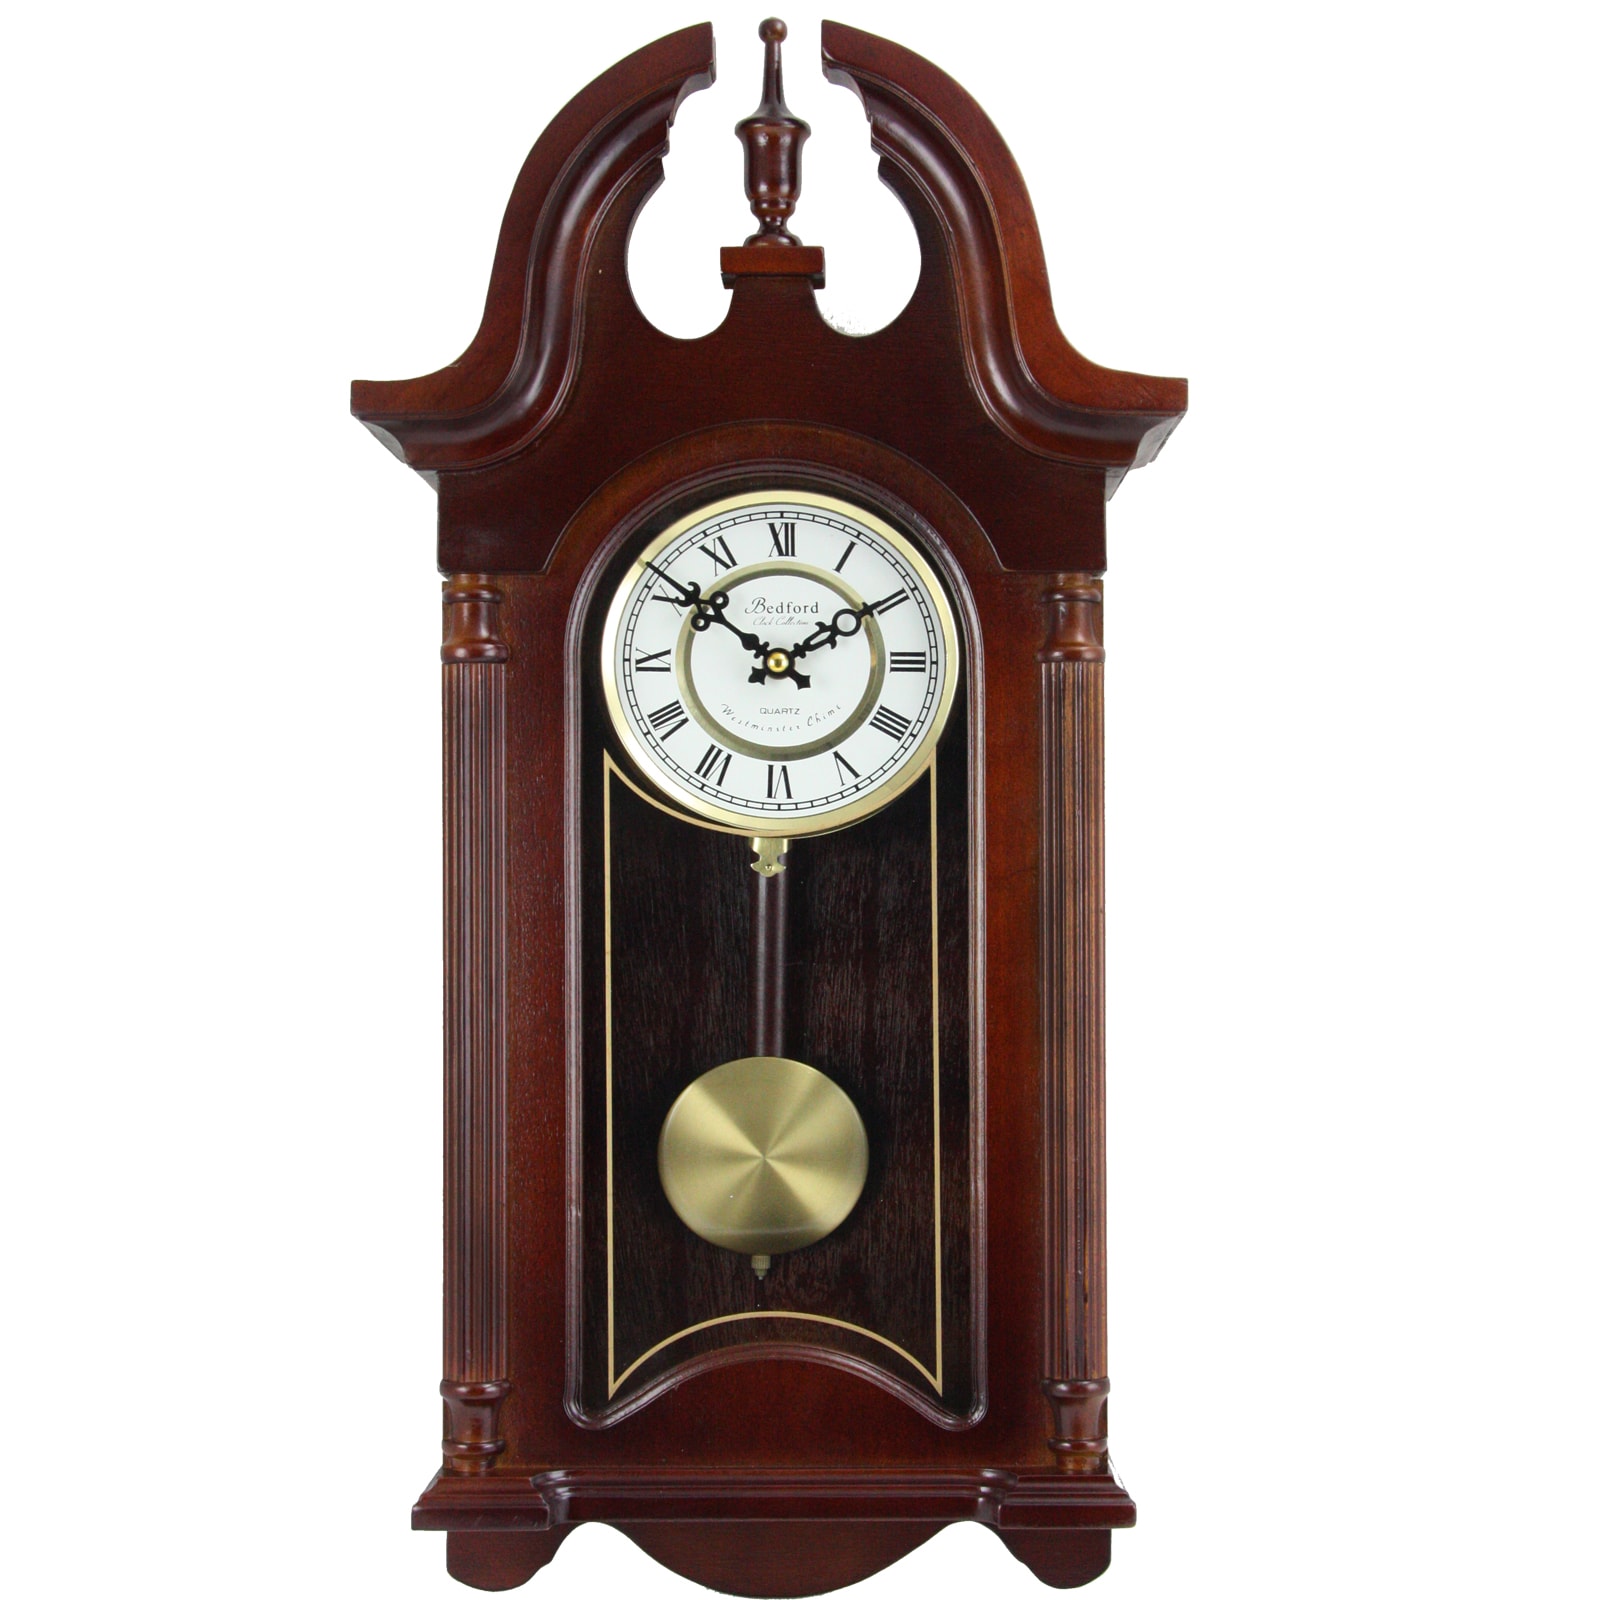 Colonial Clocks at Lowes.com